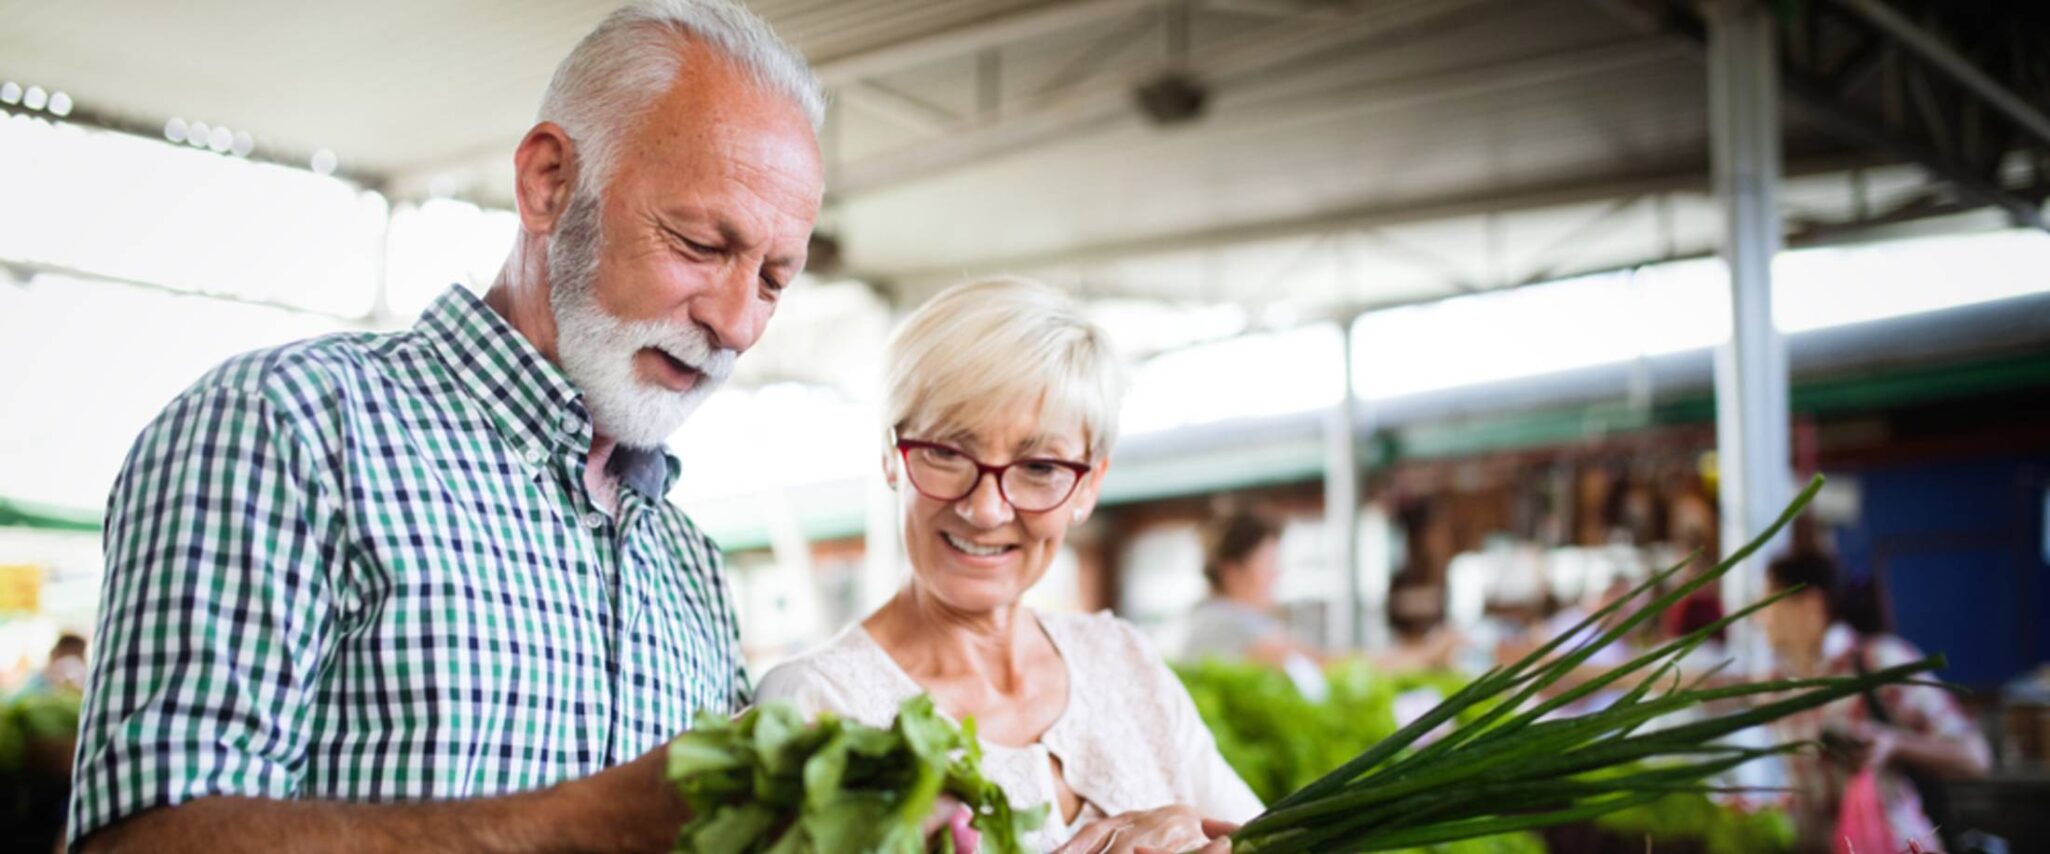 A senior man and woman look at vegetables at a farmer's market.